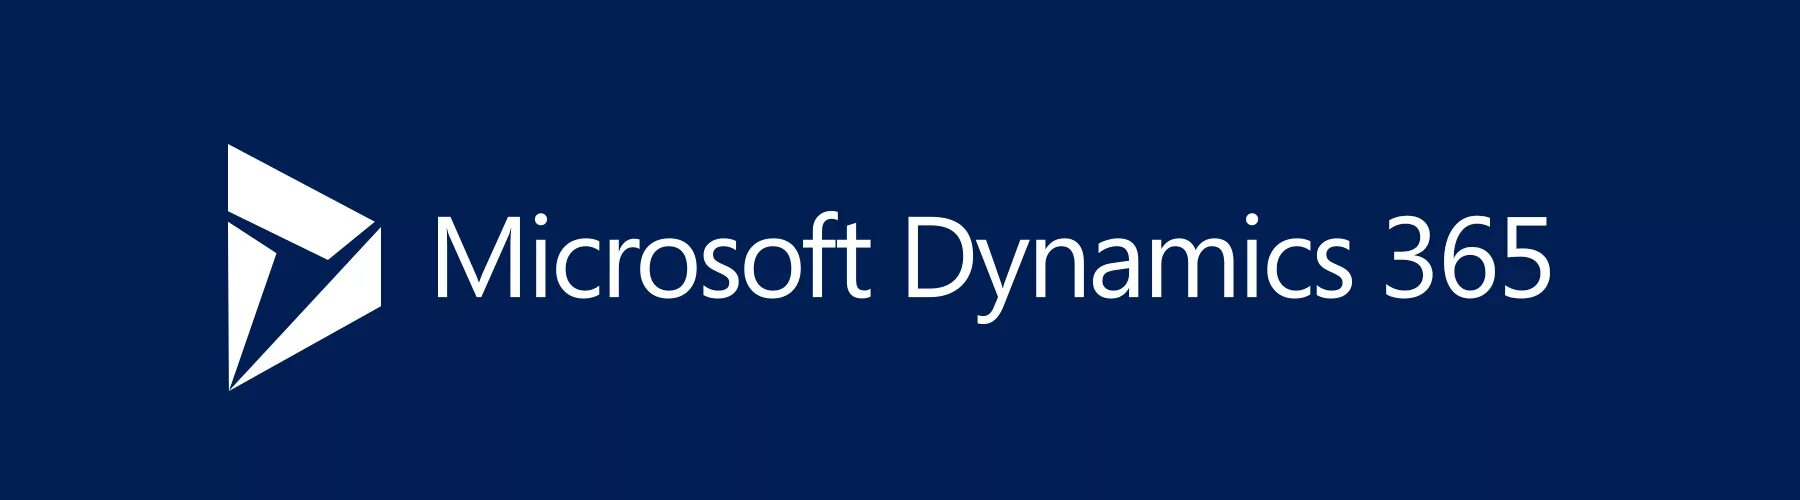 Ms dynamics. MS Dynamics 365. CRM Dynamics 365. Microsoft Dynamics 365. Microsoft Dynamics логотип.